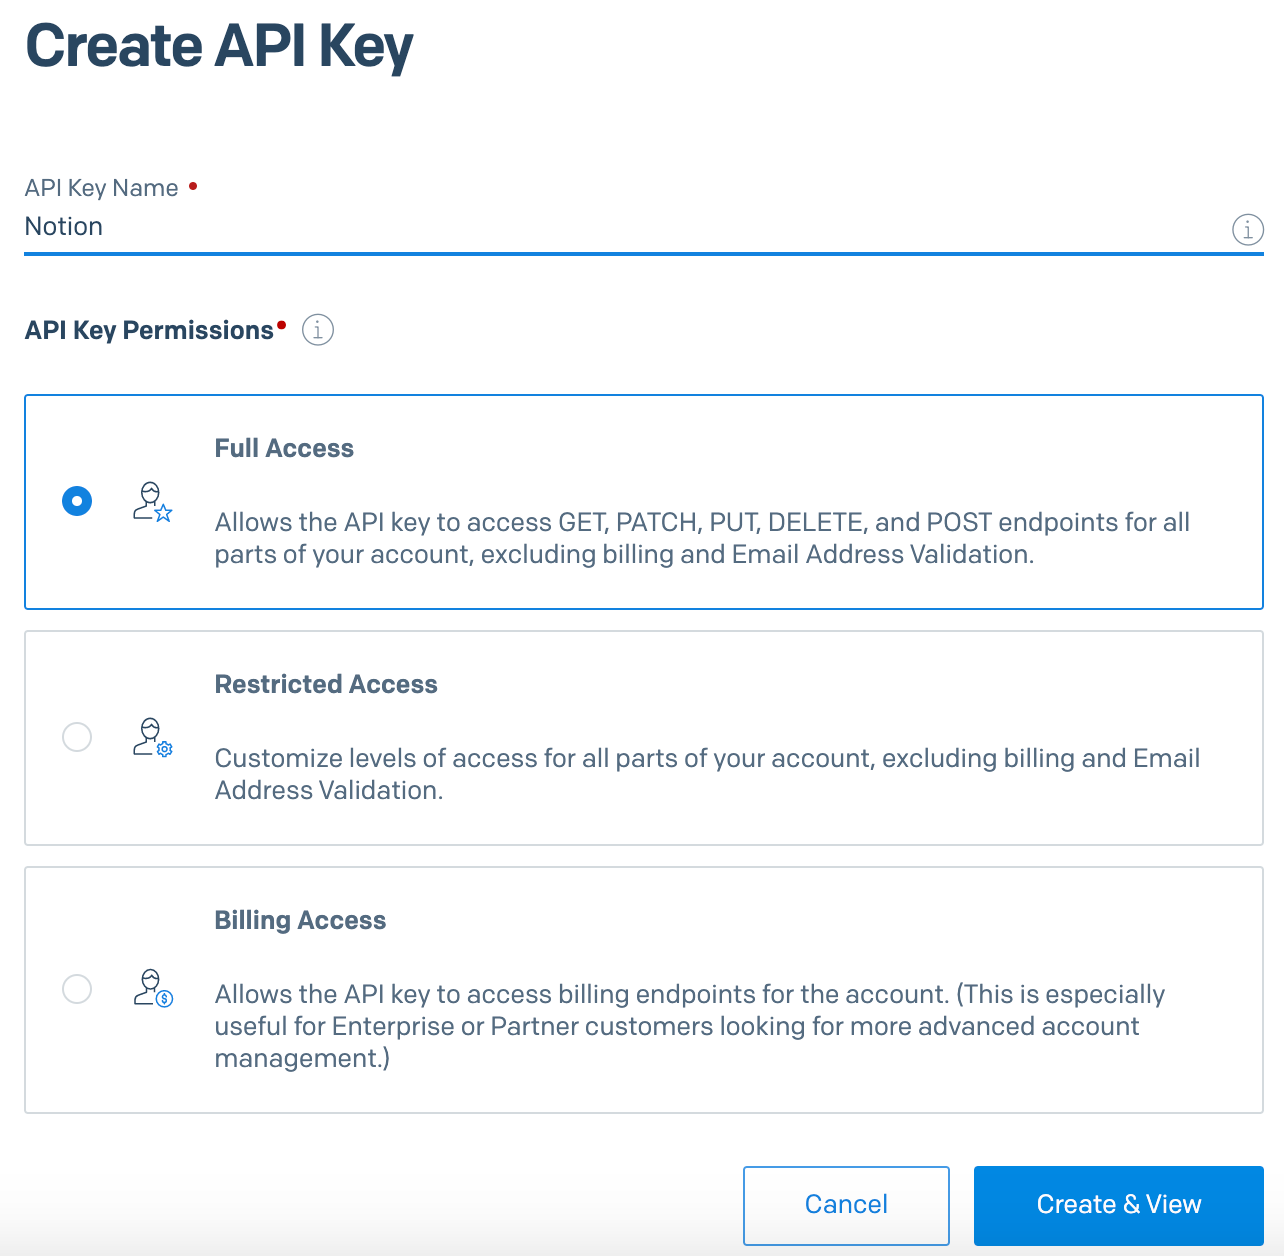 Create API Key window. The user can set the name and permissions for the API Key